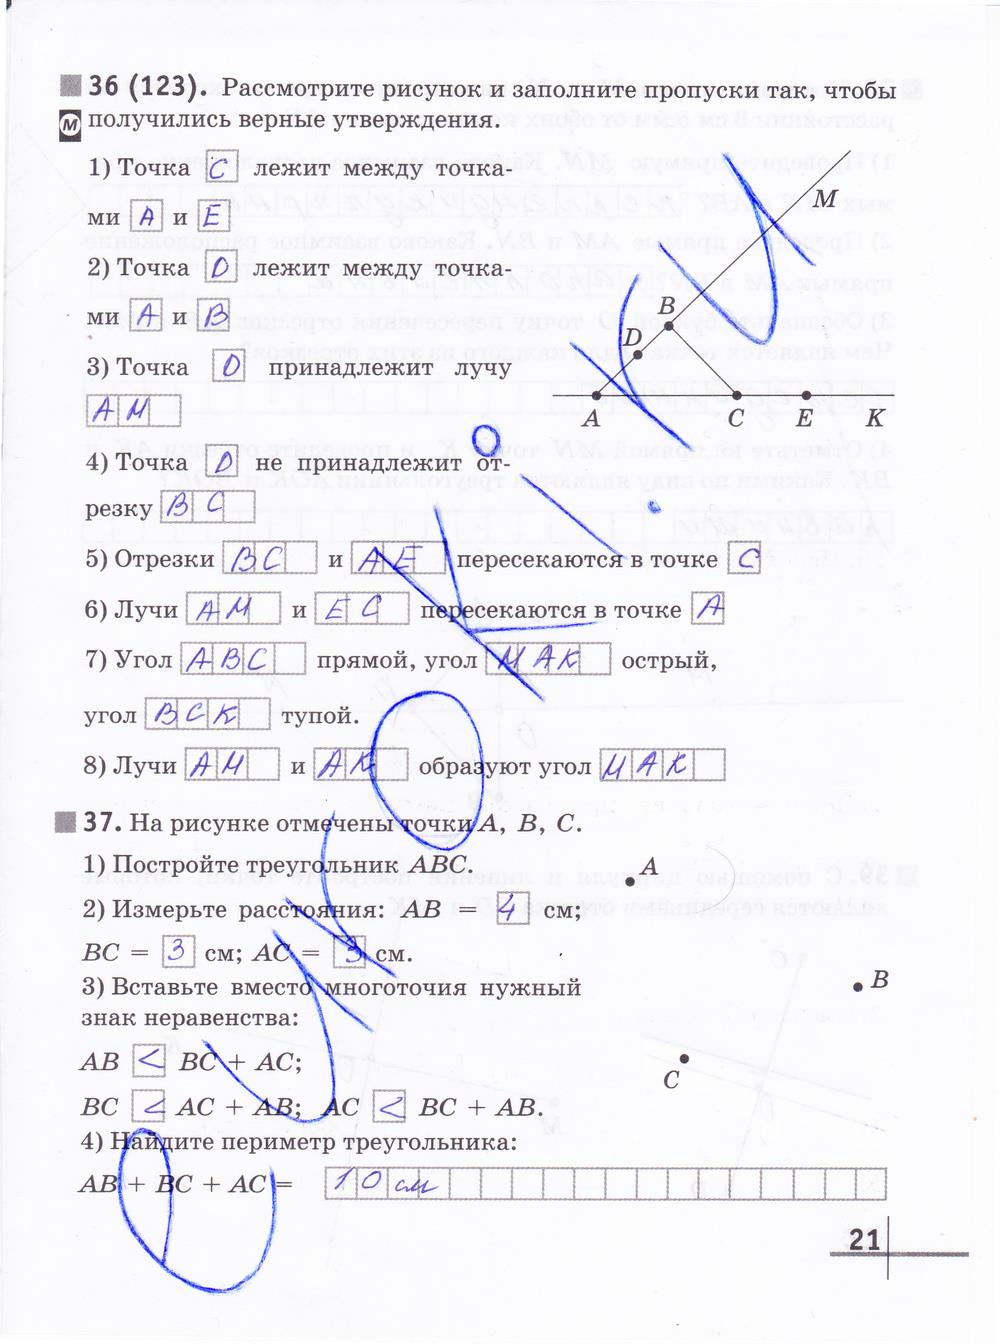 гдз 5 класс рабочая тетрадь часть 1 страница 21 математика Муравин, Муравина